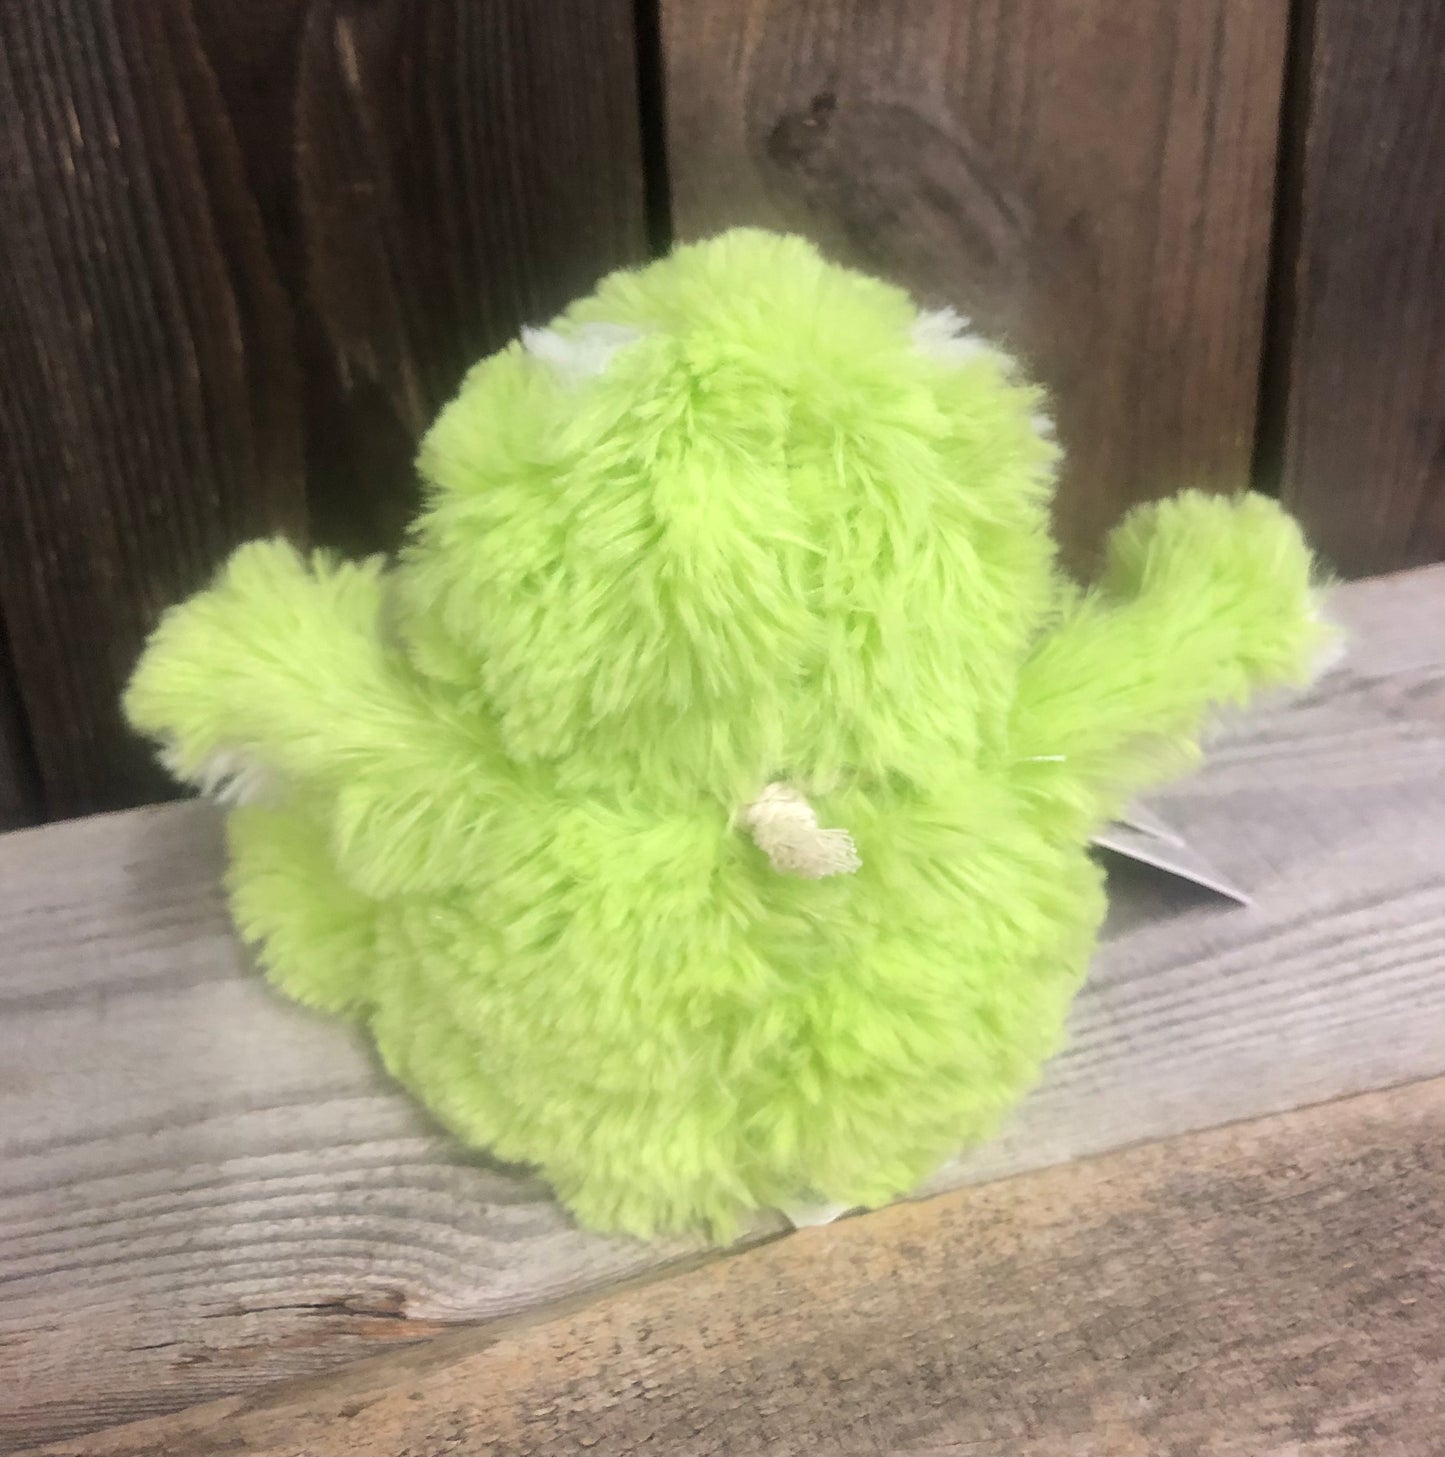 Frog Junior Warmies® Stuffed Animal